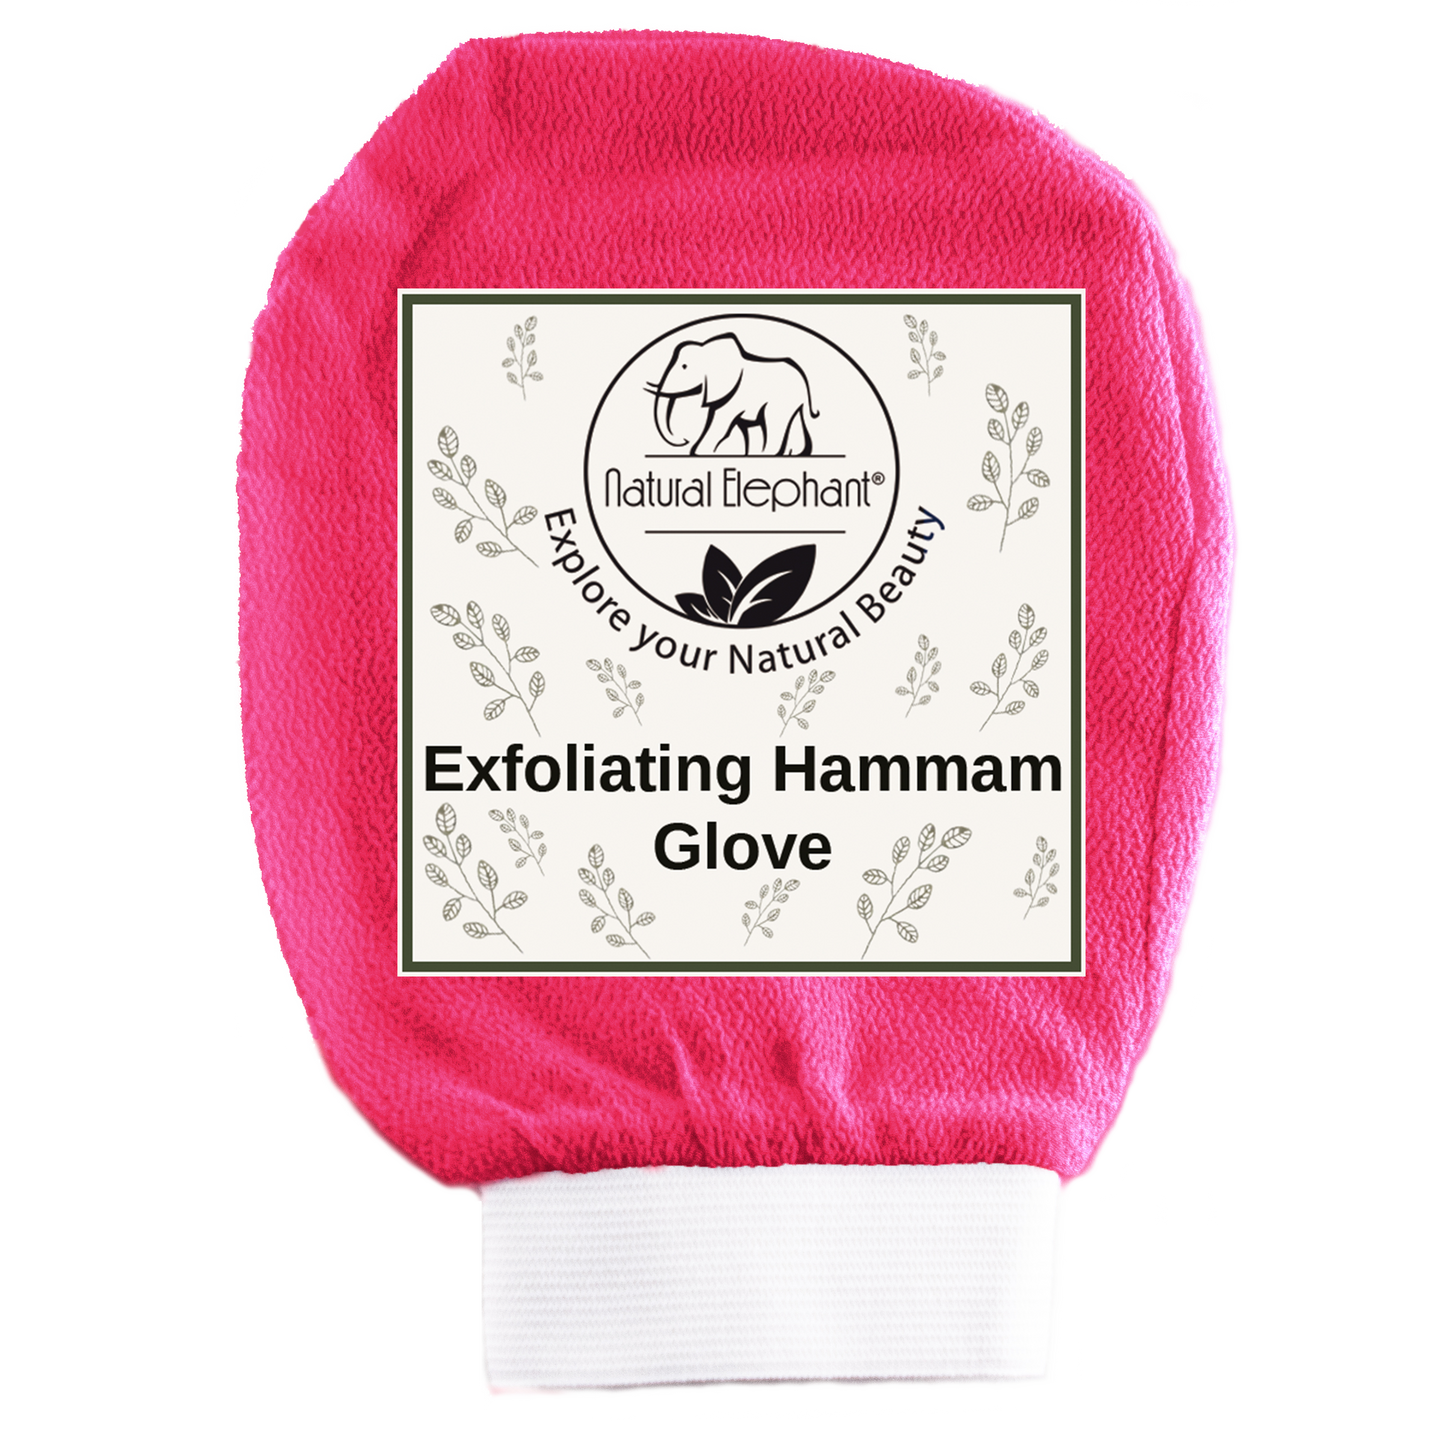 Natural Elephant Exfoliating Hammam Glove